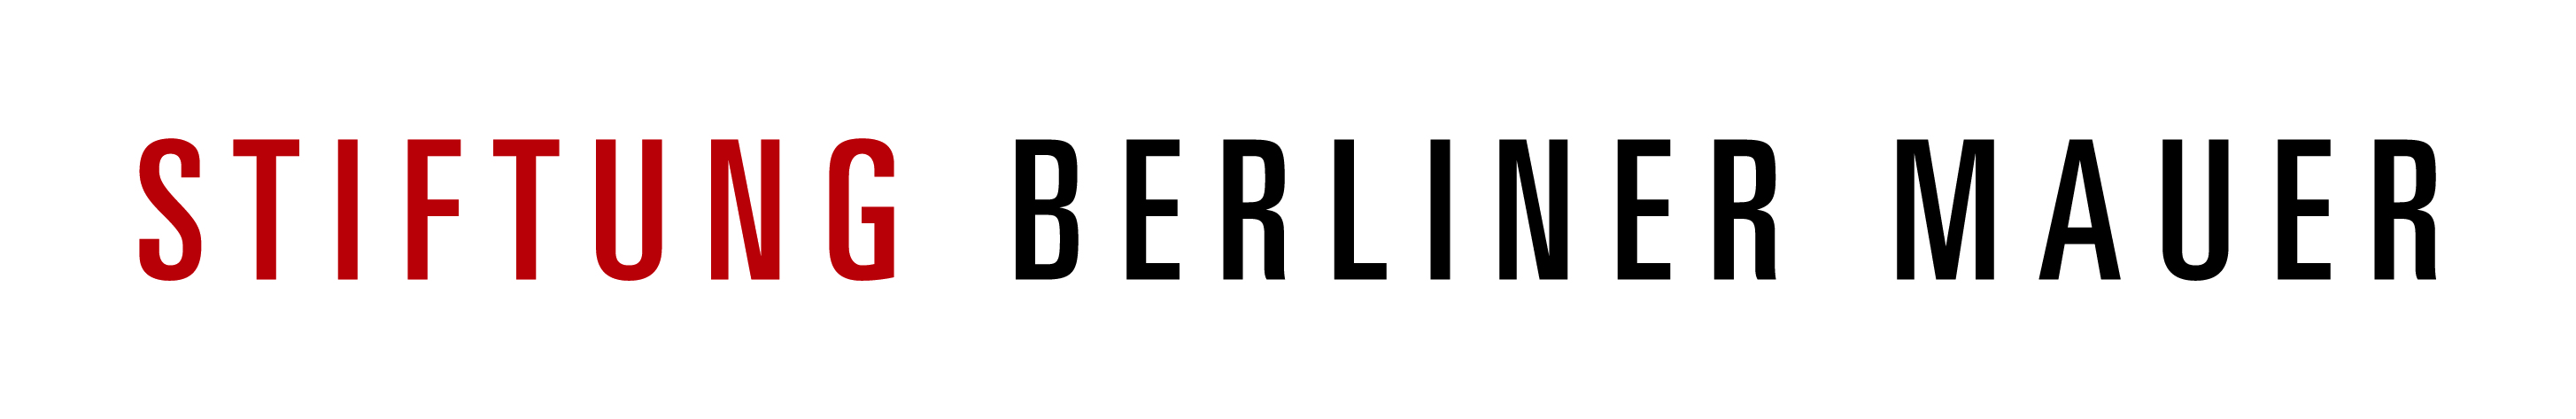 Stiftung_Berliner_Mauer_Logo_cmyk